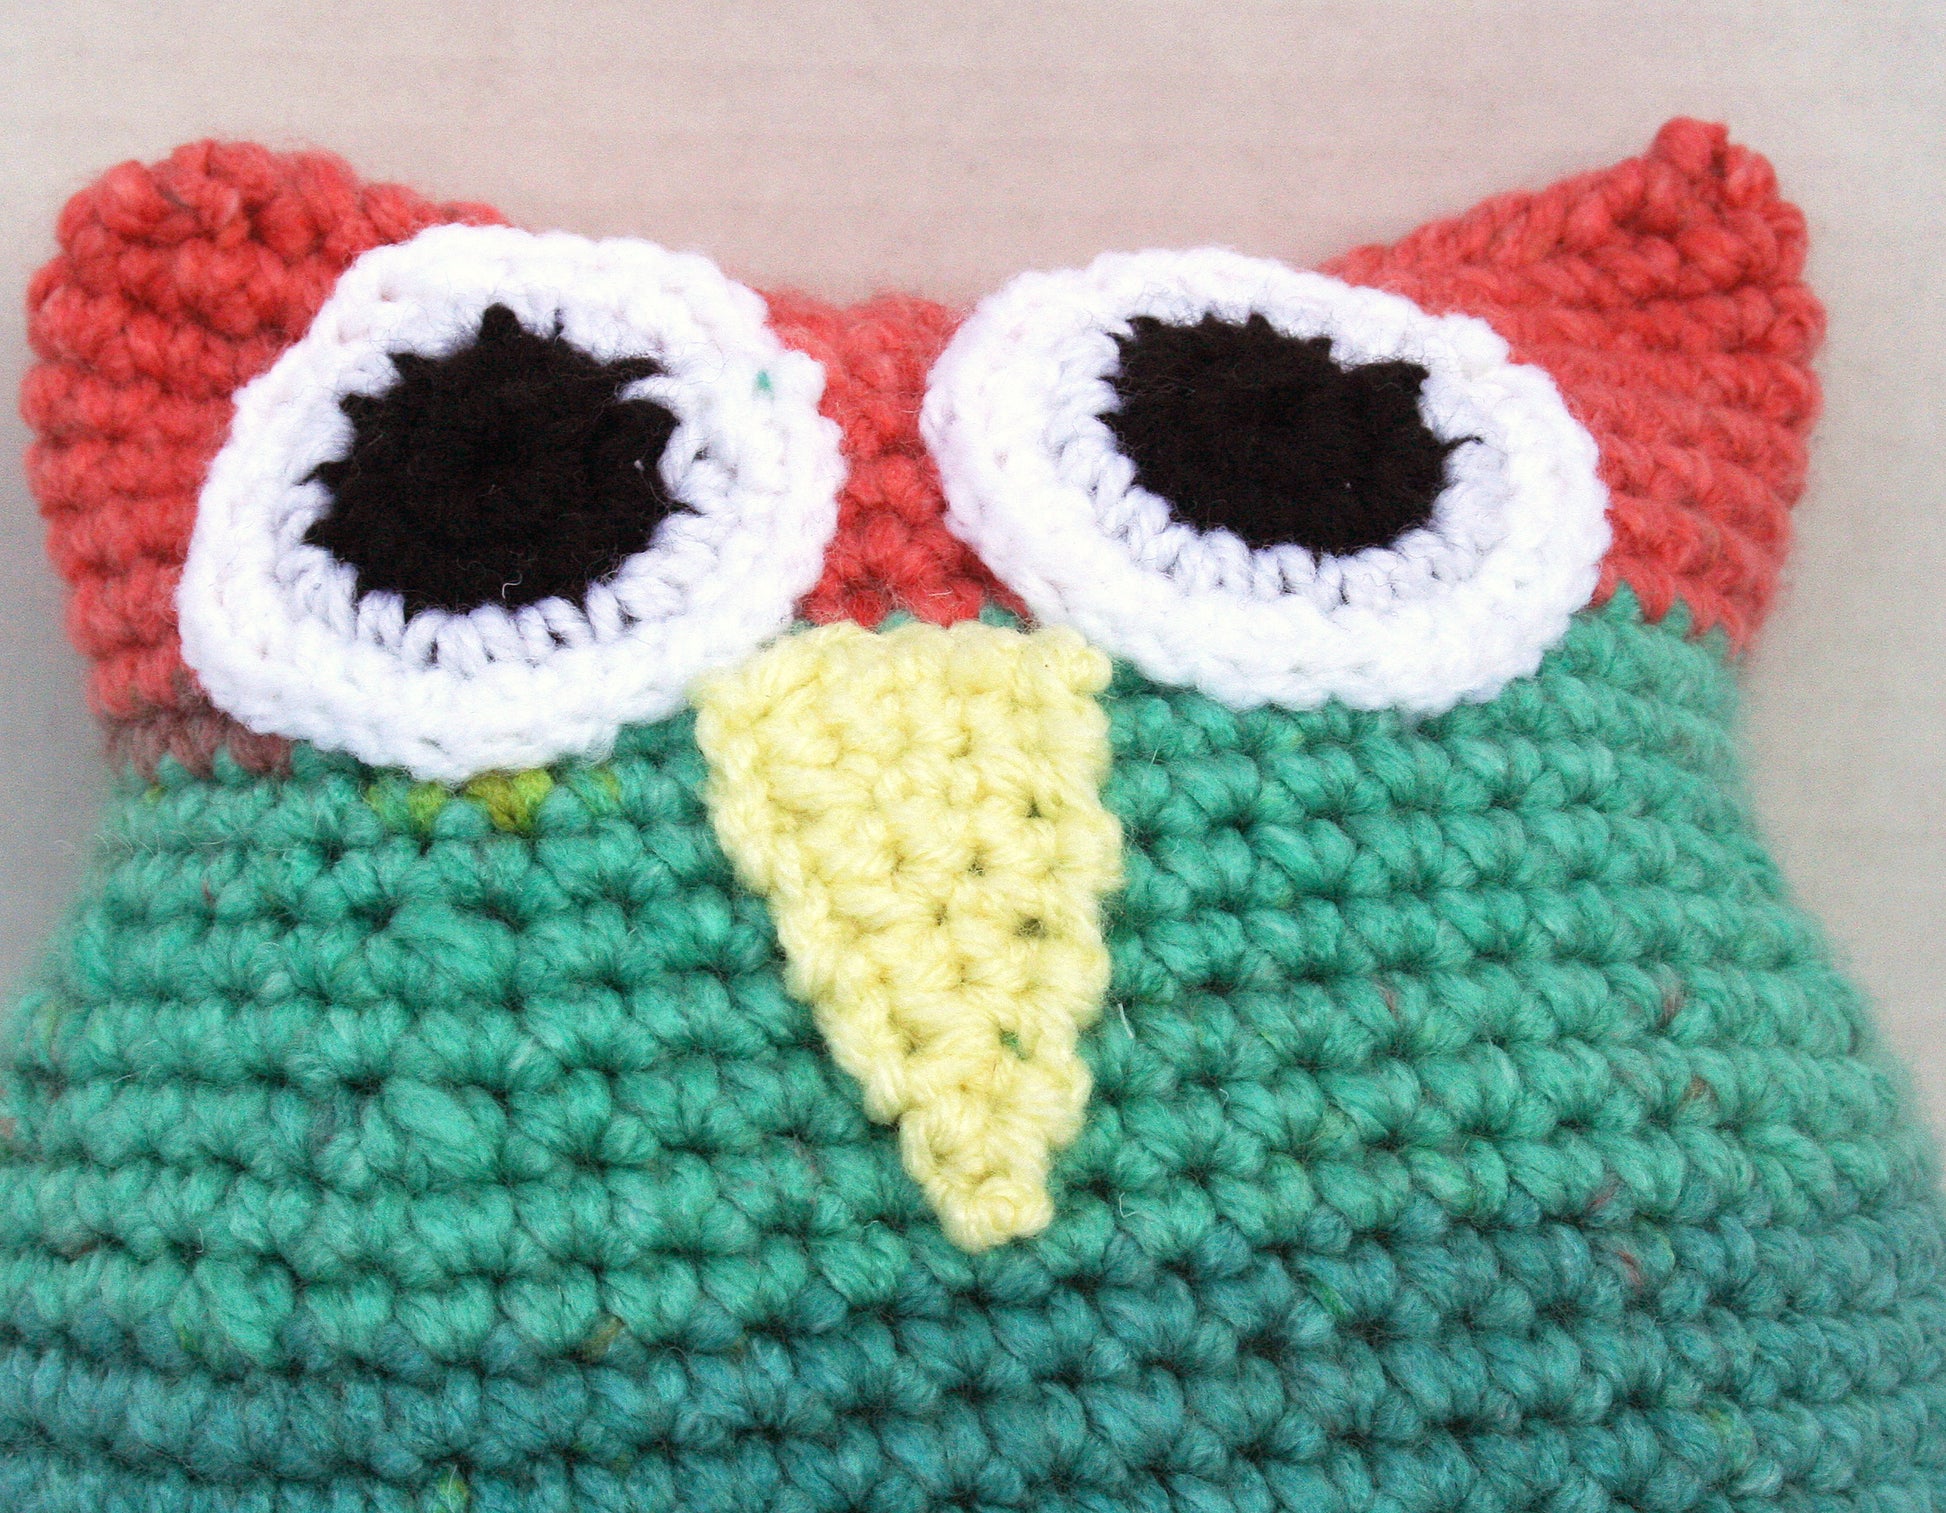 Handmade Amigurumi - Crocheted Toys